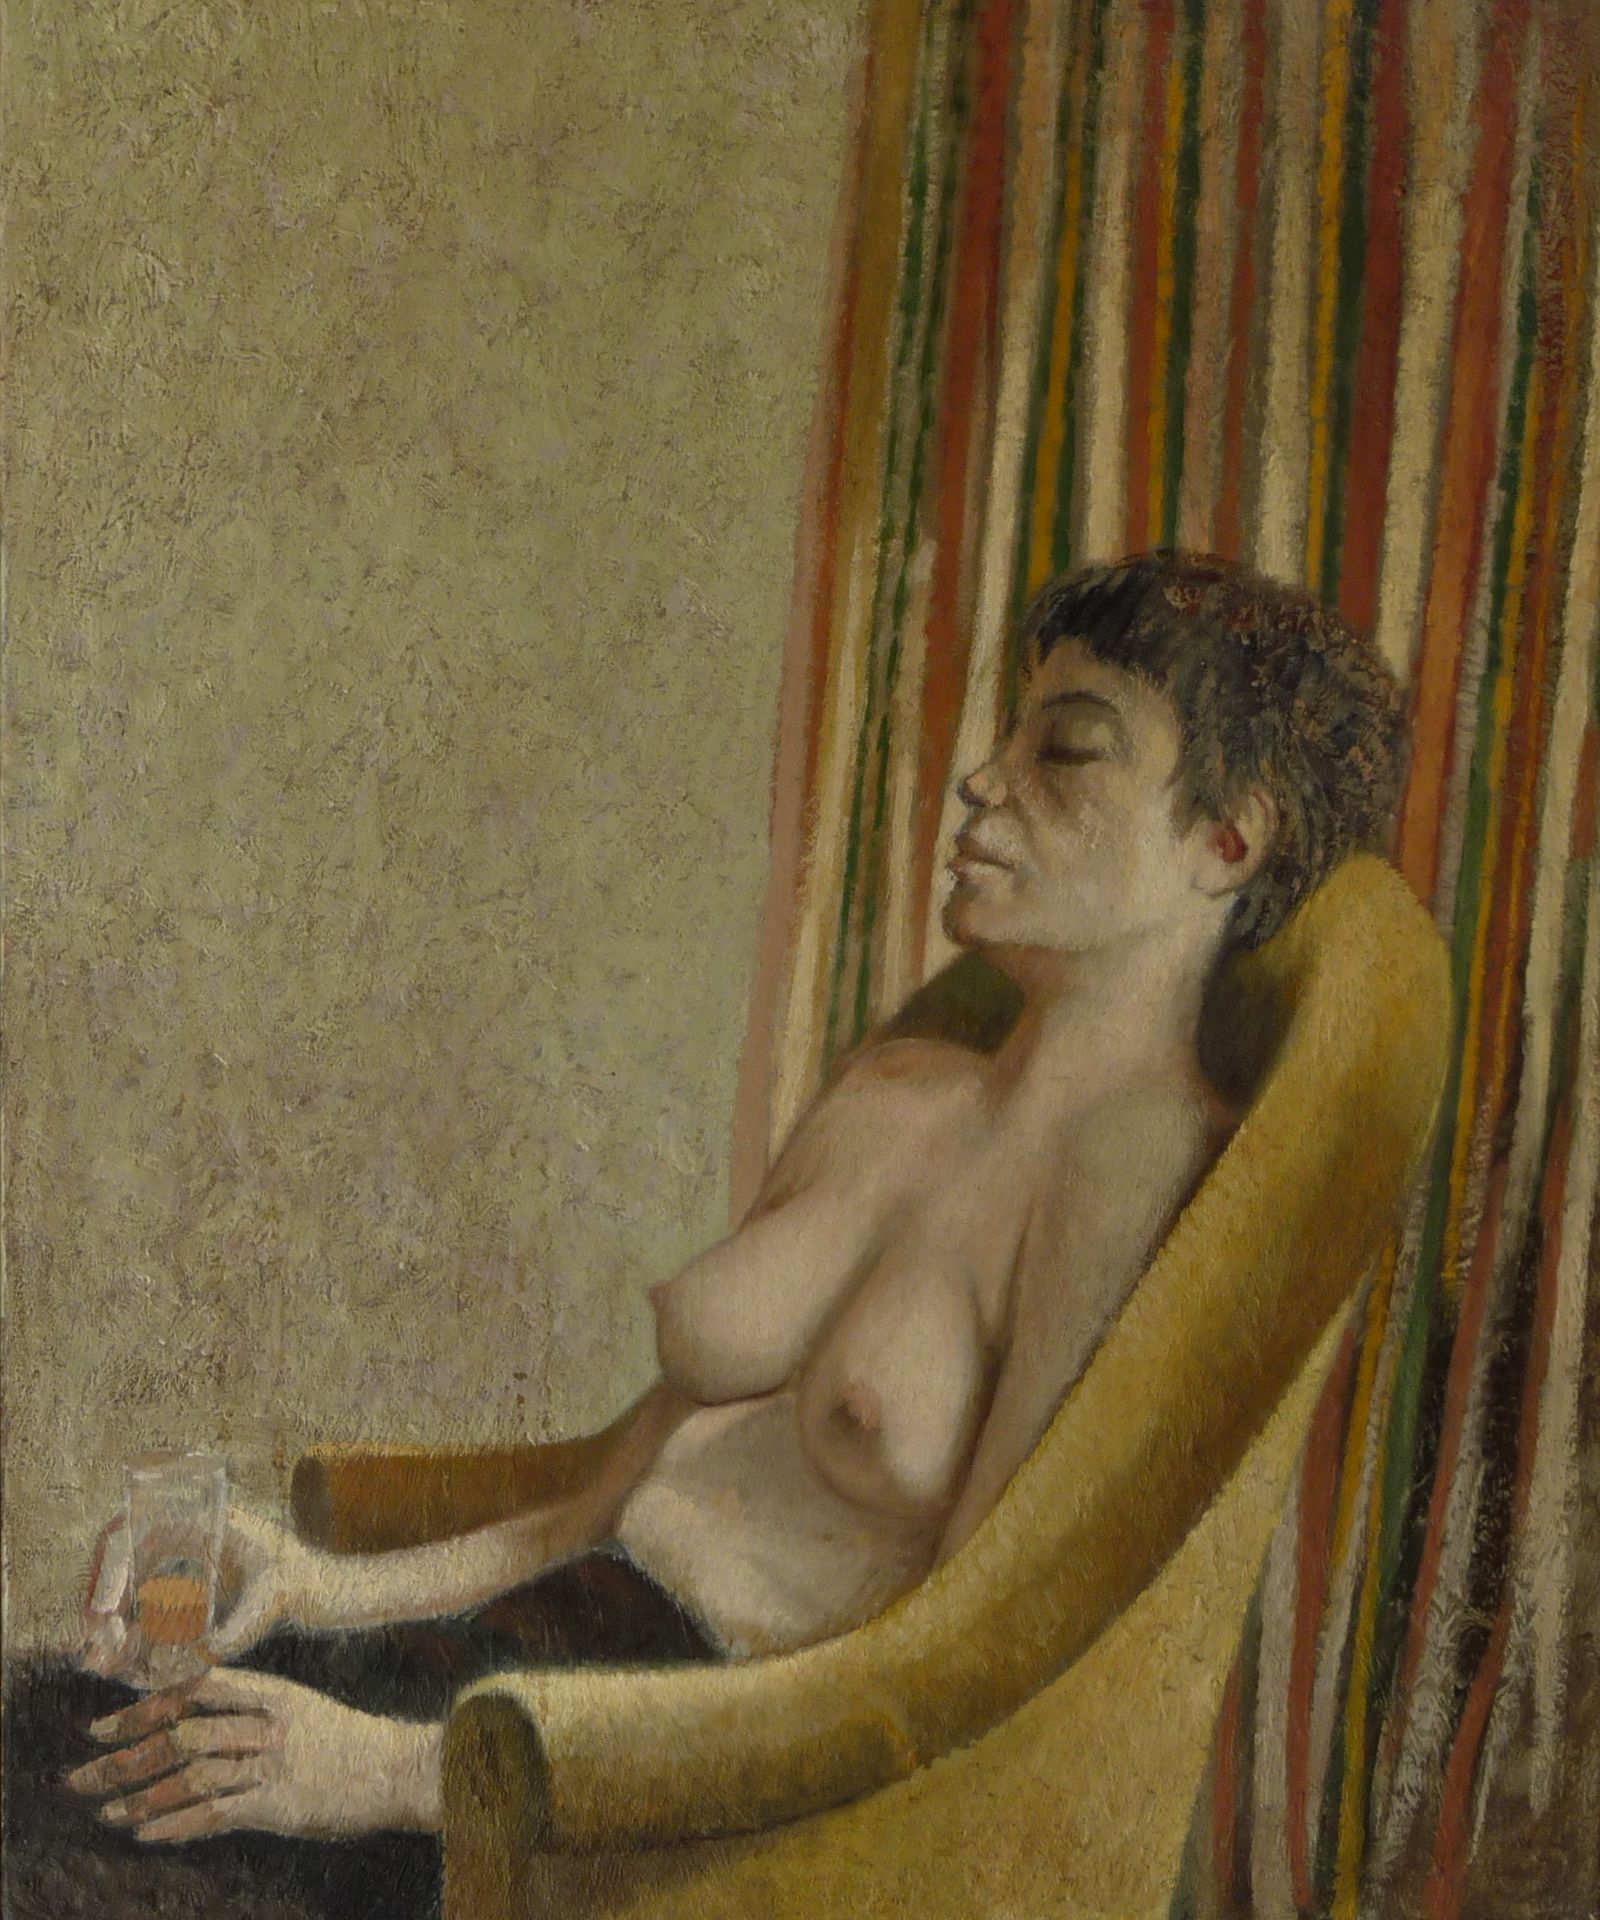 Null 让-克劳德-贝松-吉拉尔 (1938-2021)

玛蒂娜坐在黄色的扶手椅上，喝着一杯威士忌

布面油画，无签名

55 x 46 厘米